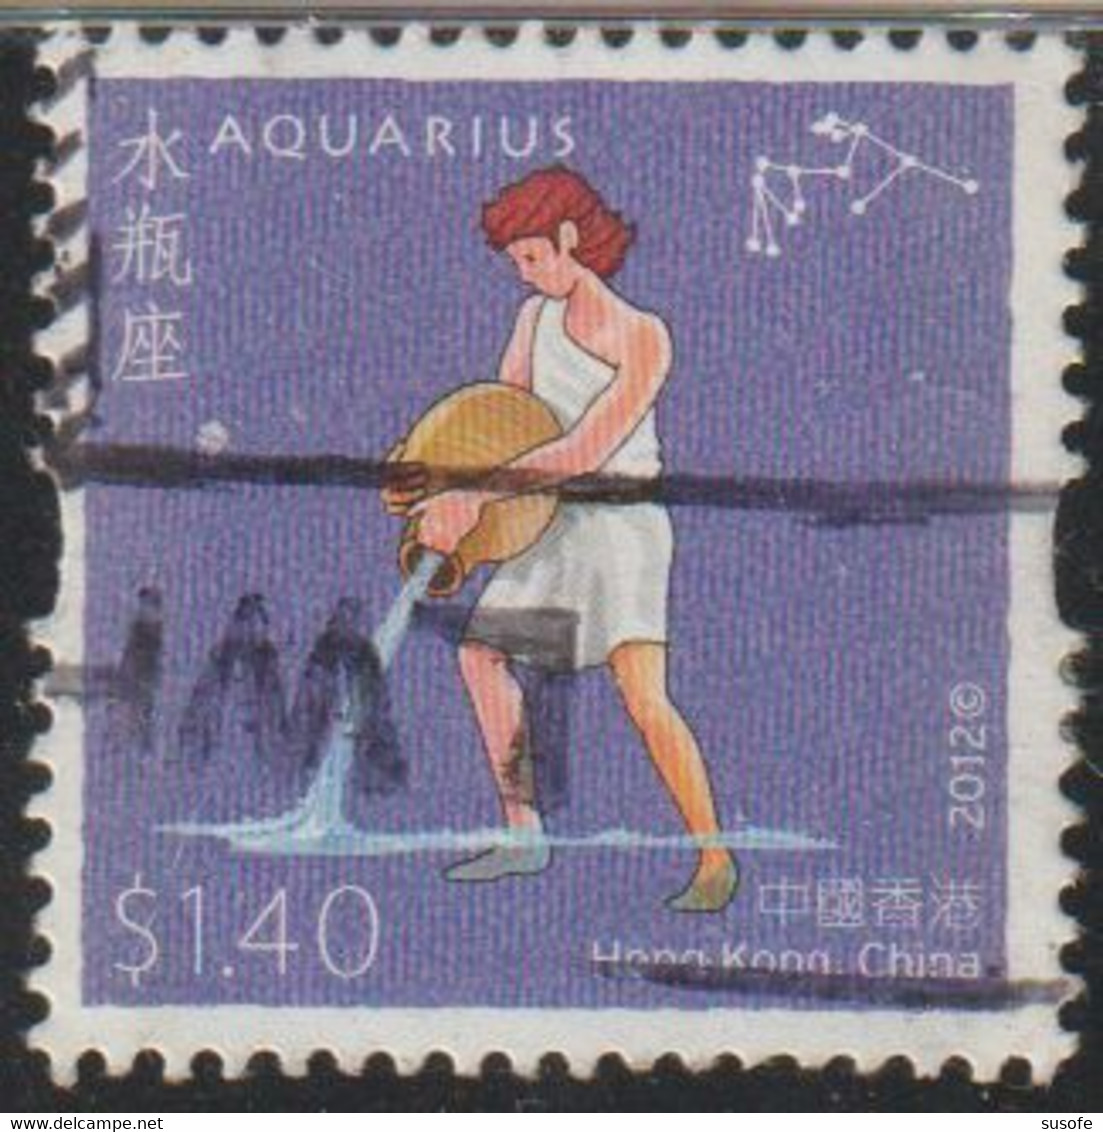 Hong Kong China 2012 Scott 1738 Sello º Signos Del Zodiaco Acuario Aquarius Michel 1739 Yvert 1606 Stamps Timbre - Usati